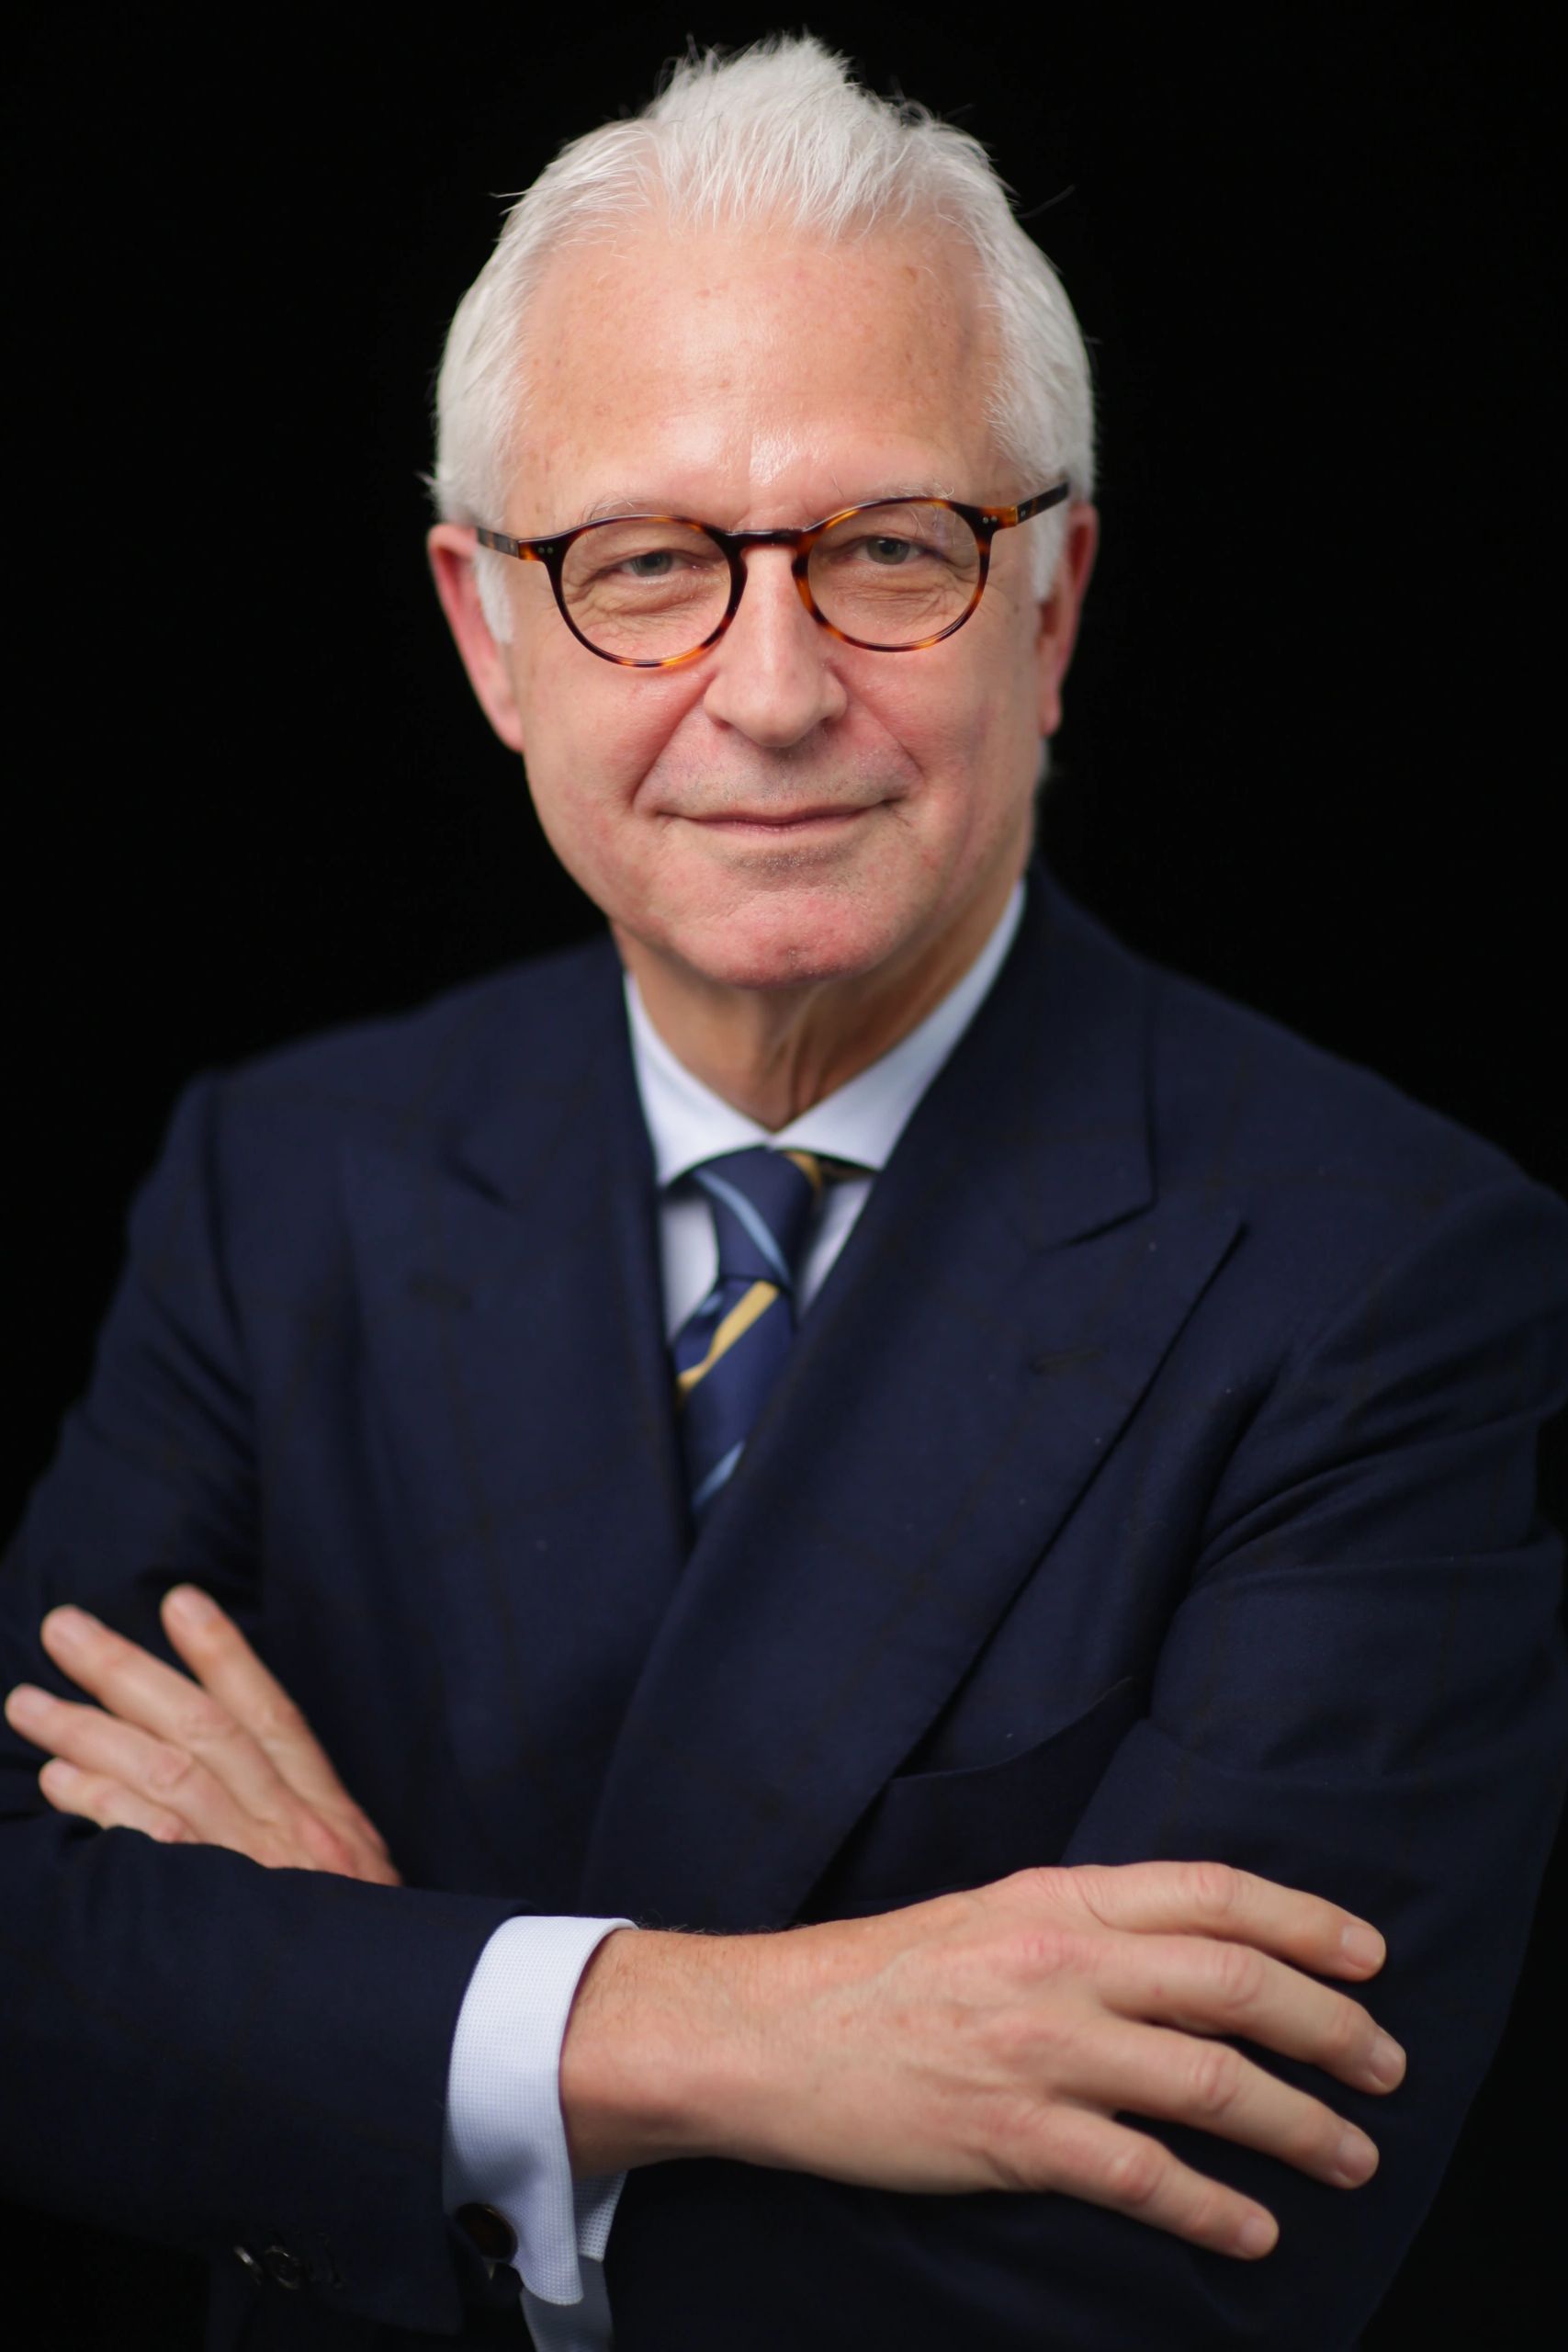 Dr. Philip E. Stieg, professor and chairman of the Weill Cornell Medicine Brain and Spine Center